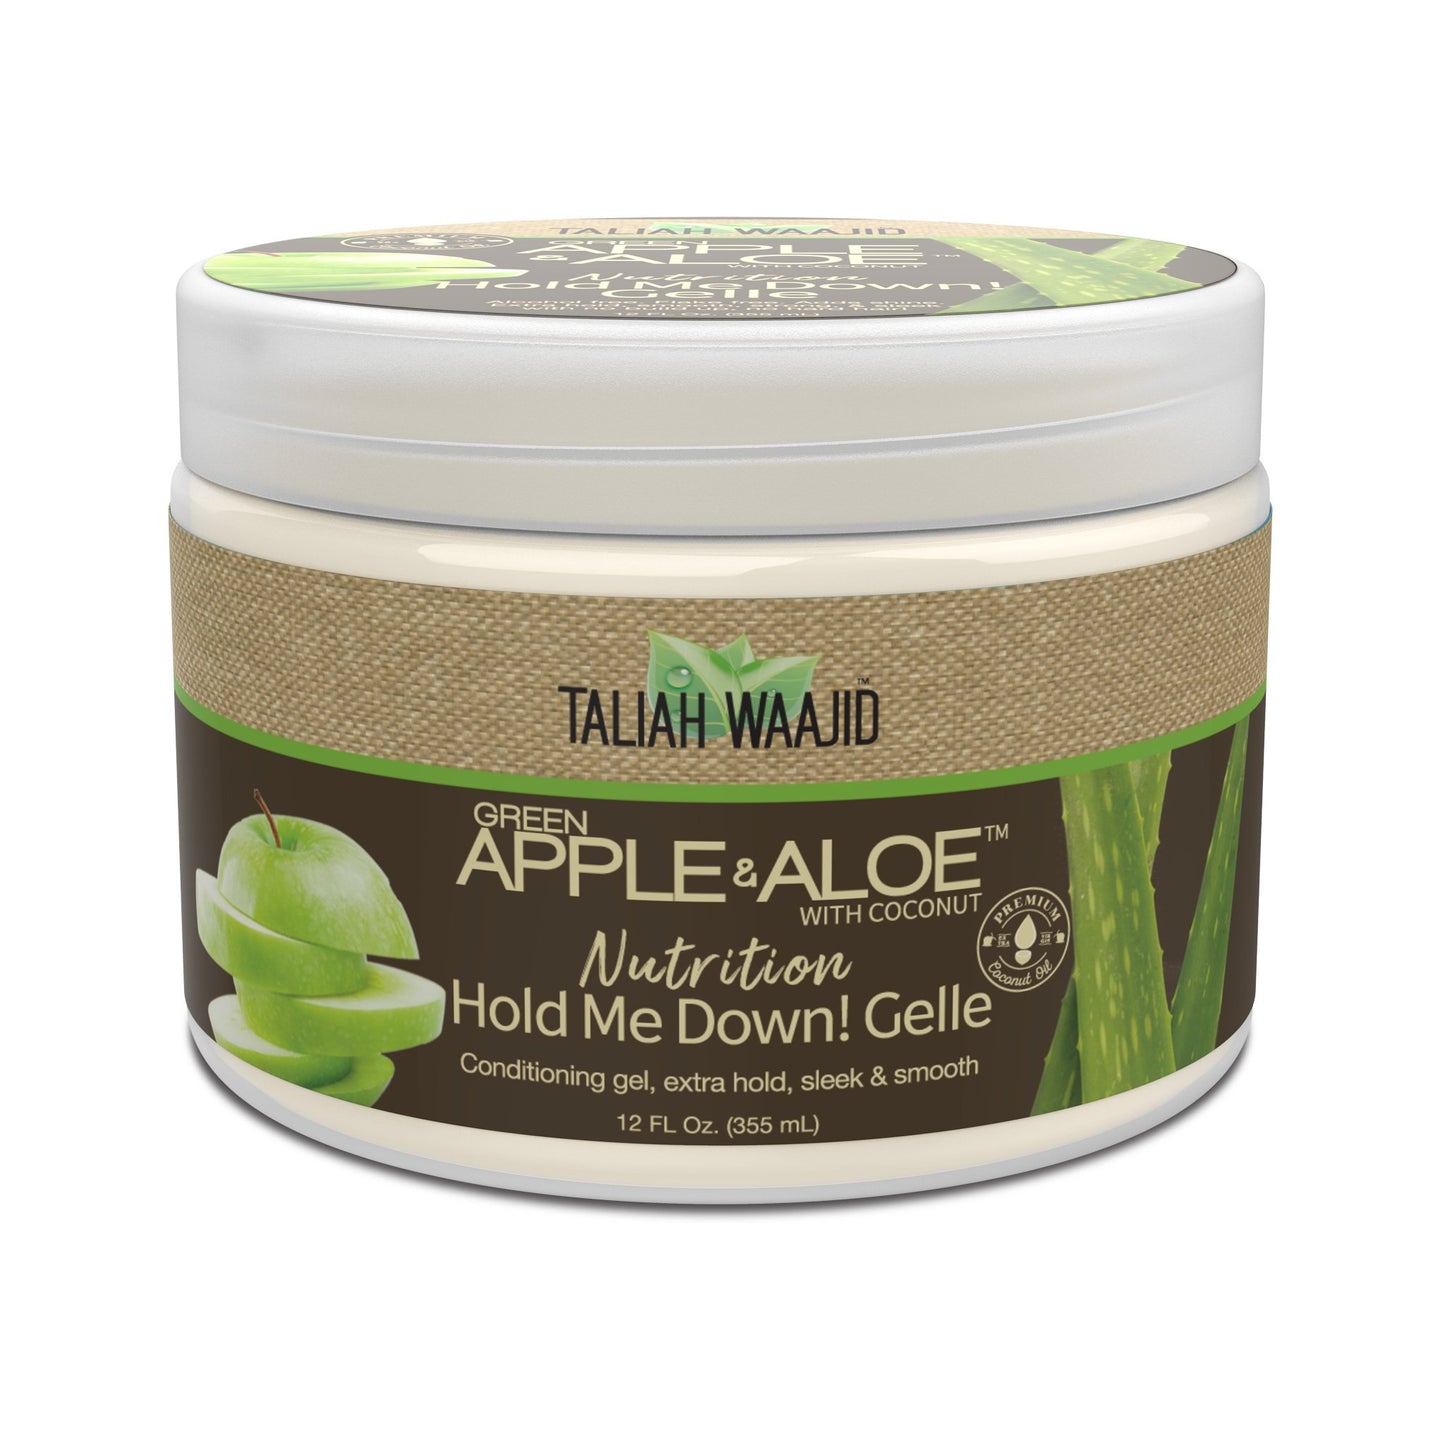 Taliah Waajid: Apple & Aloe Hold me Down Gelle